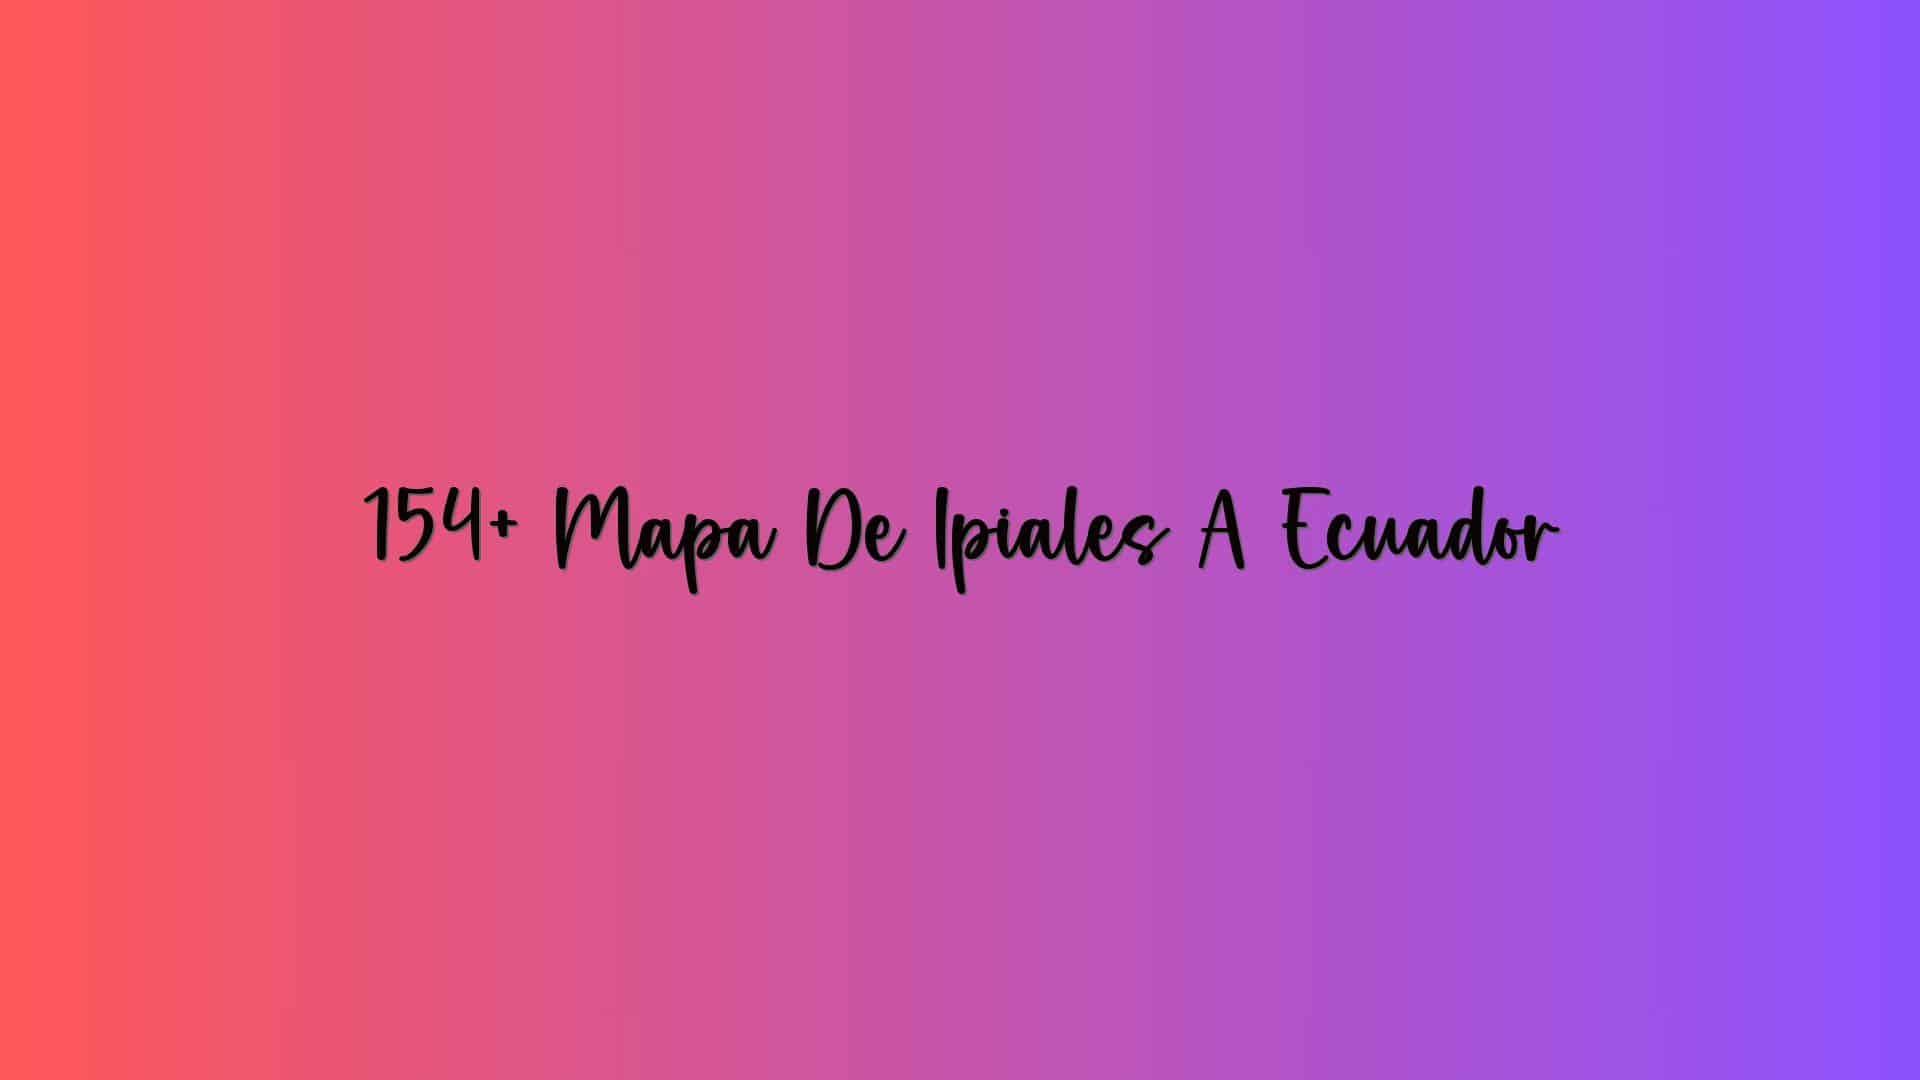 154+ Mapa De Ipiales A Ecuador